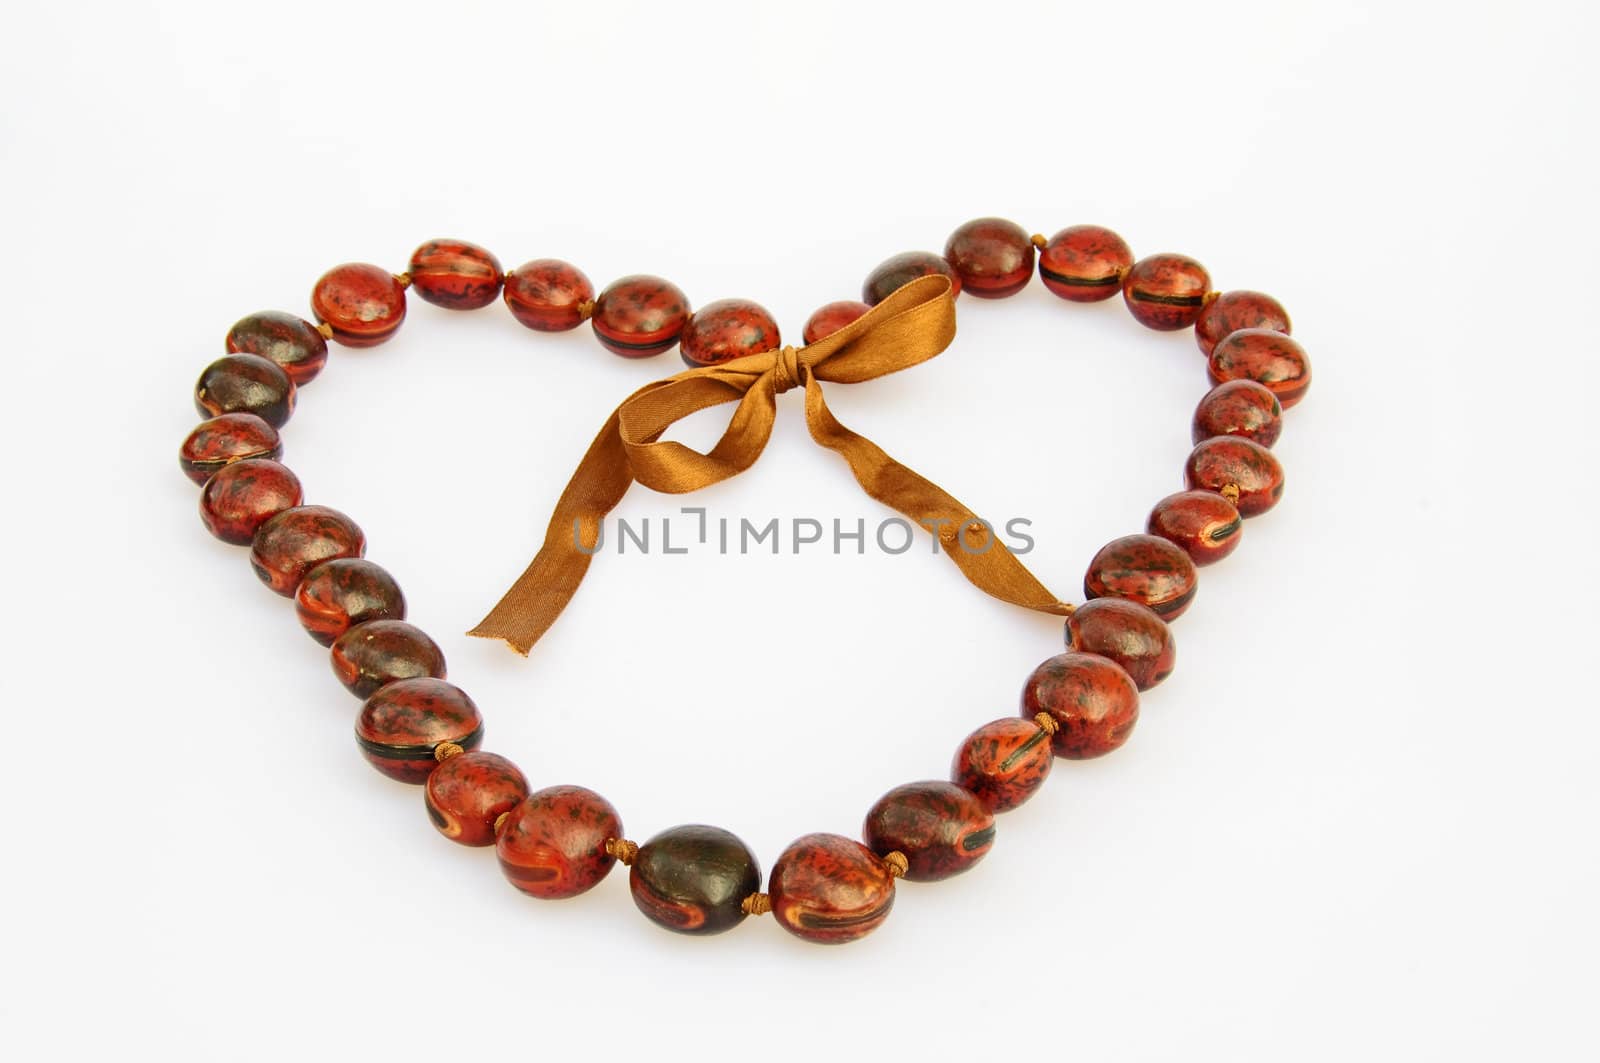 A necklace made of wood shaped like a heart